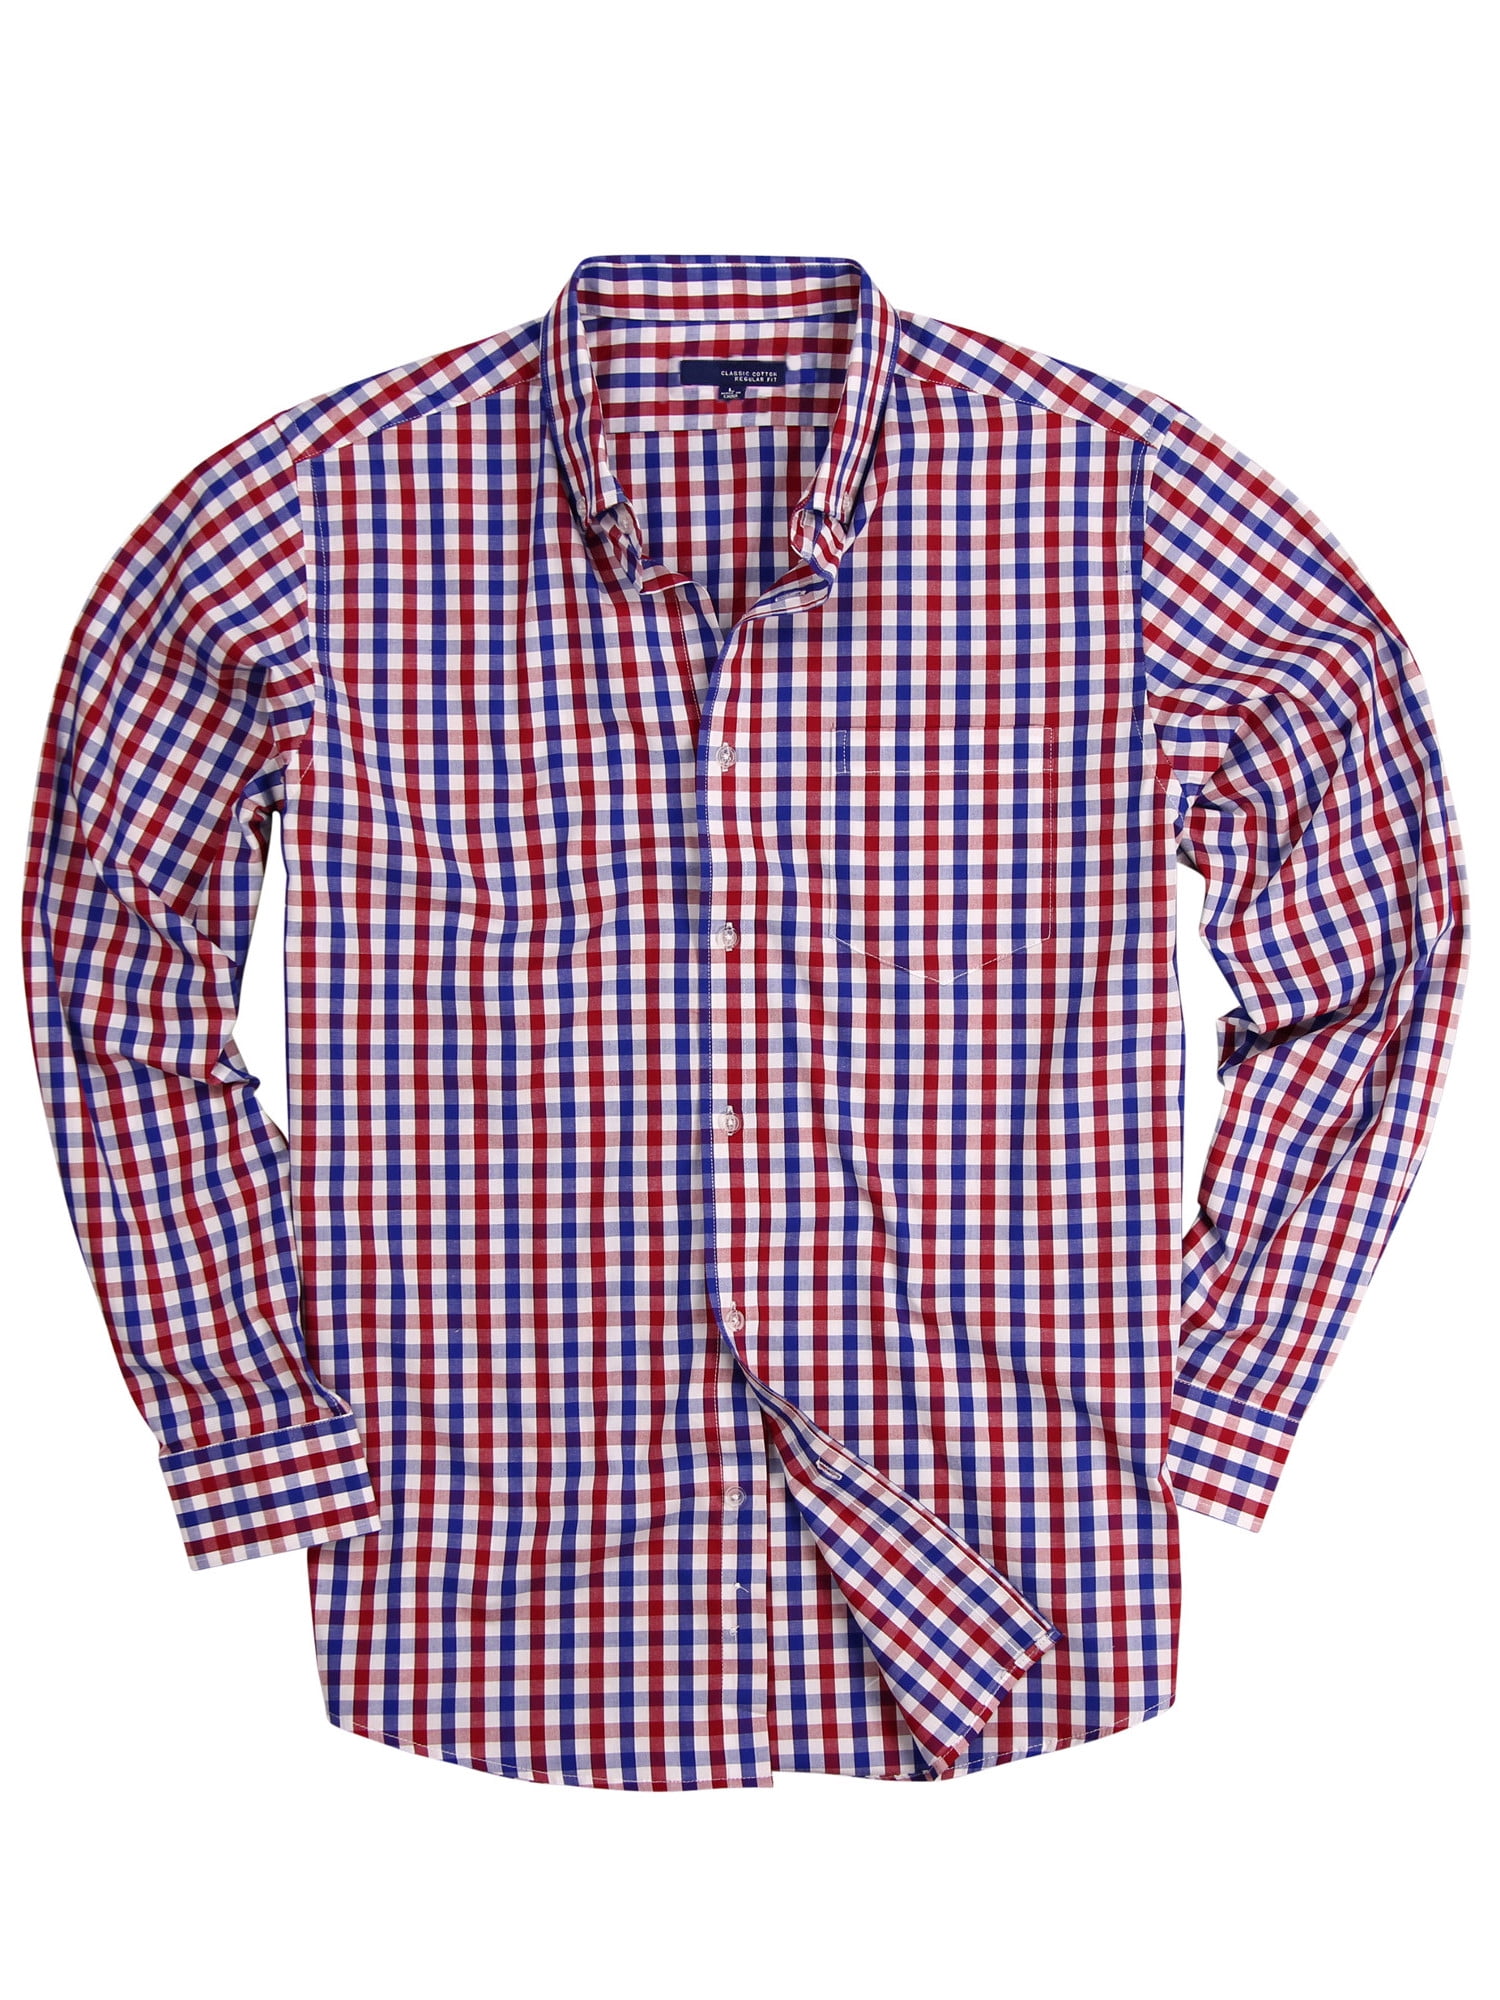 Mfasica Men Spring Summer Long Sleeve Plaid Casual 100% Cotton Dress Shirts 